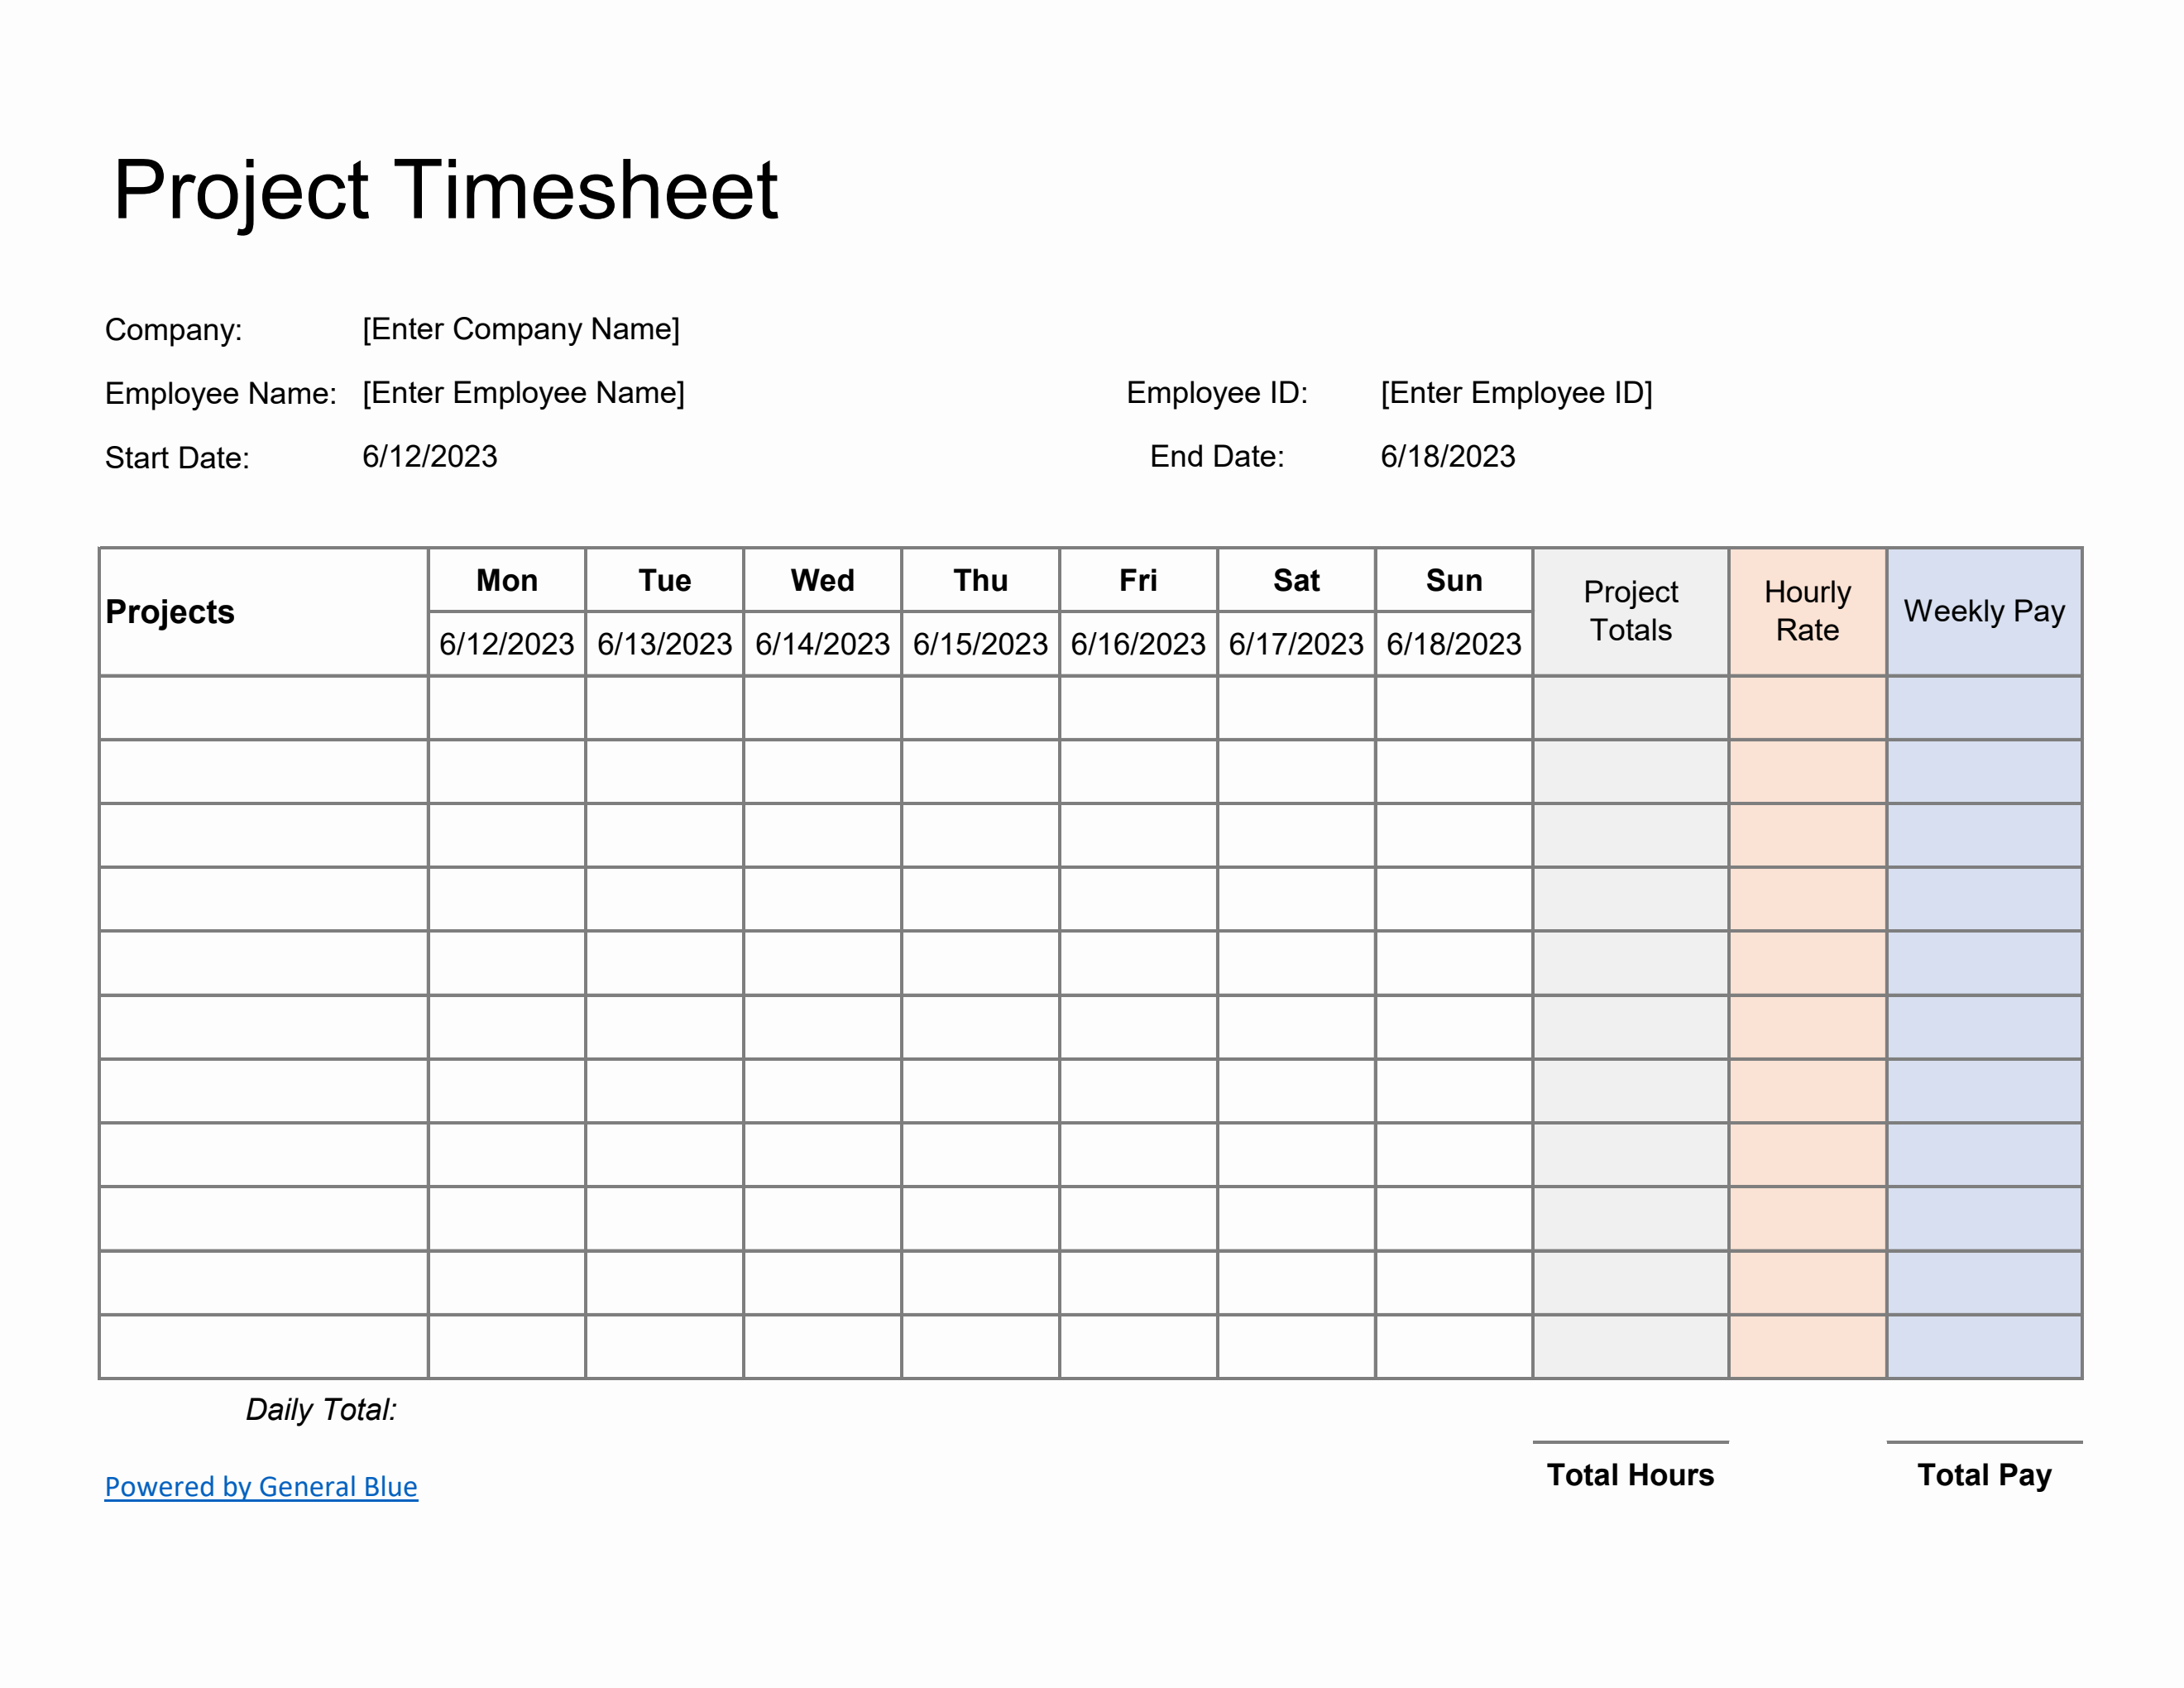 weekly-timesheet-templates